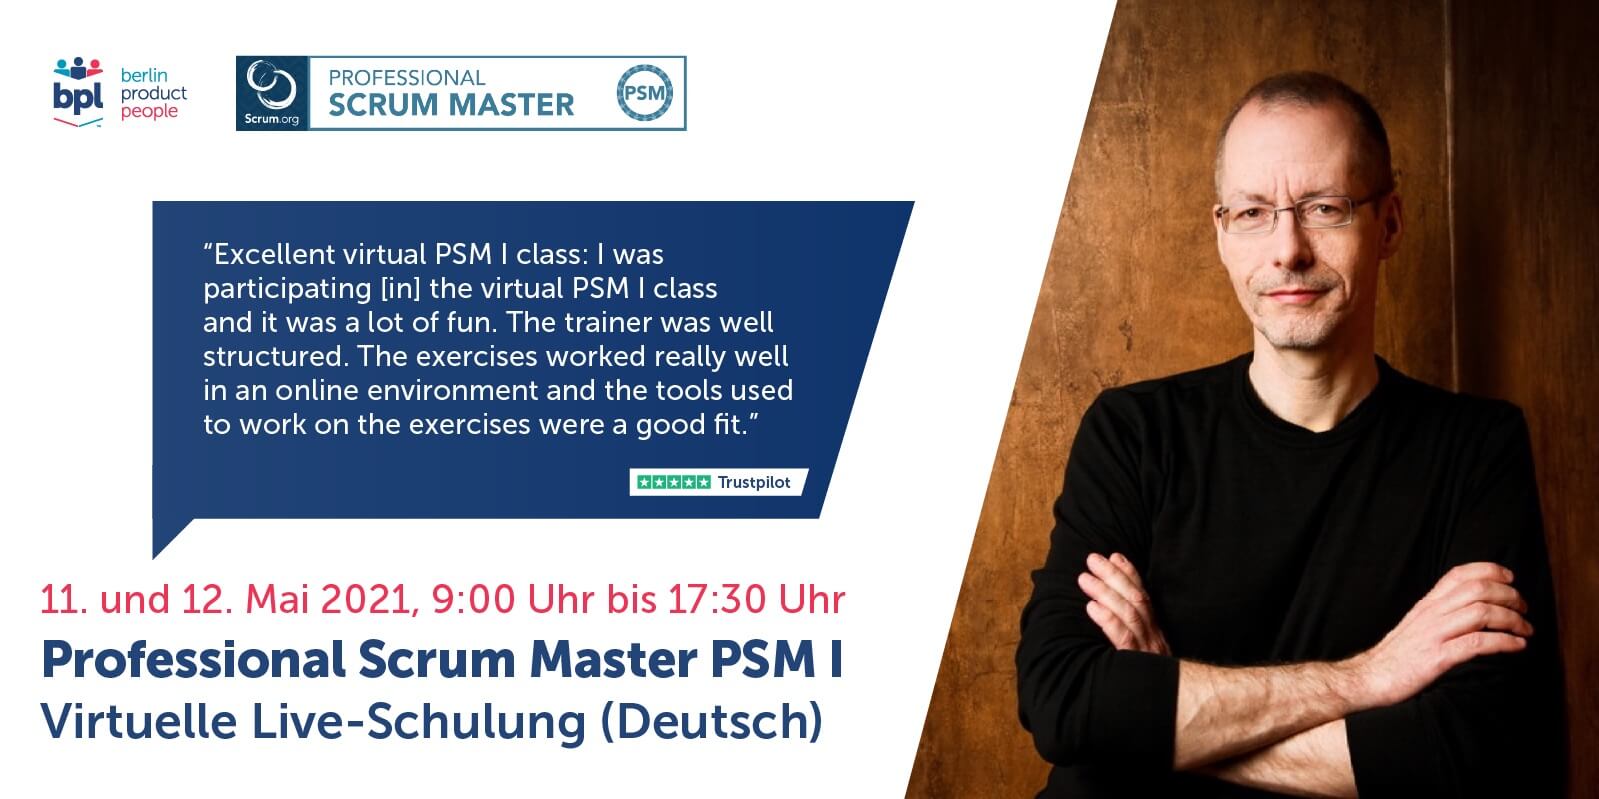 Professional Scrum Master Schulung mit PSM I Zertifikat — Online: 11. und 12. Mai 2021 — Berlin Product People GmbH